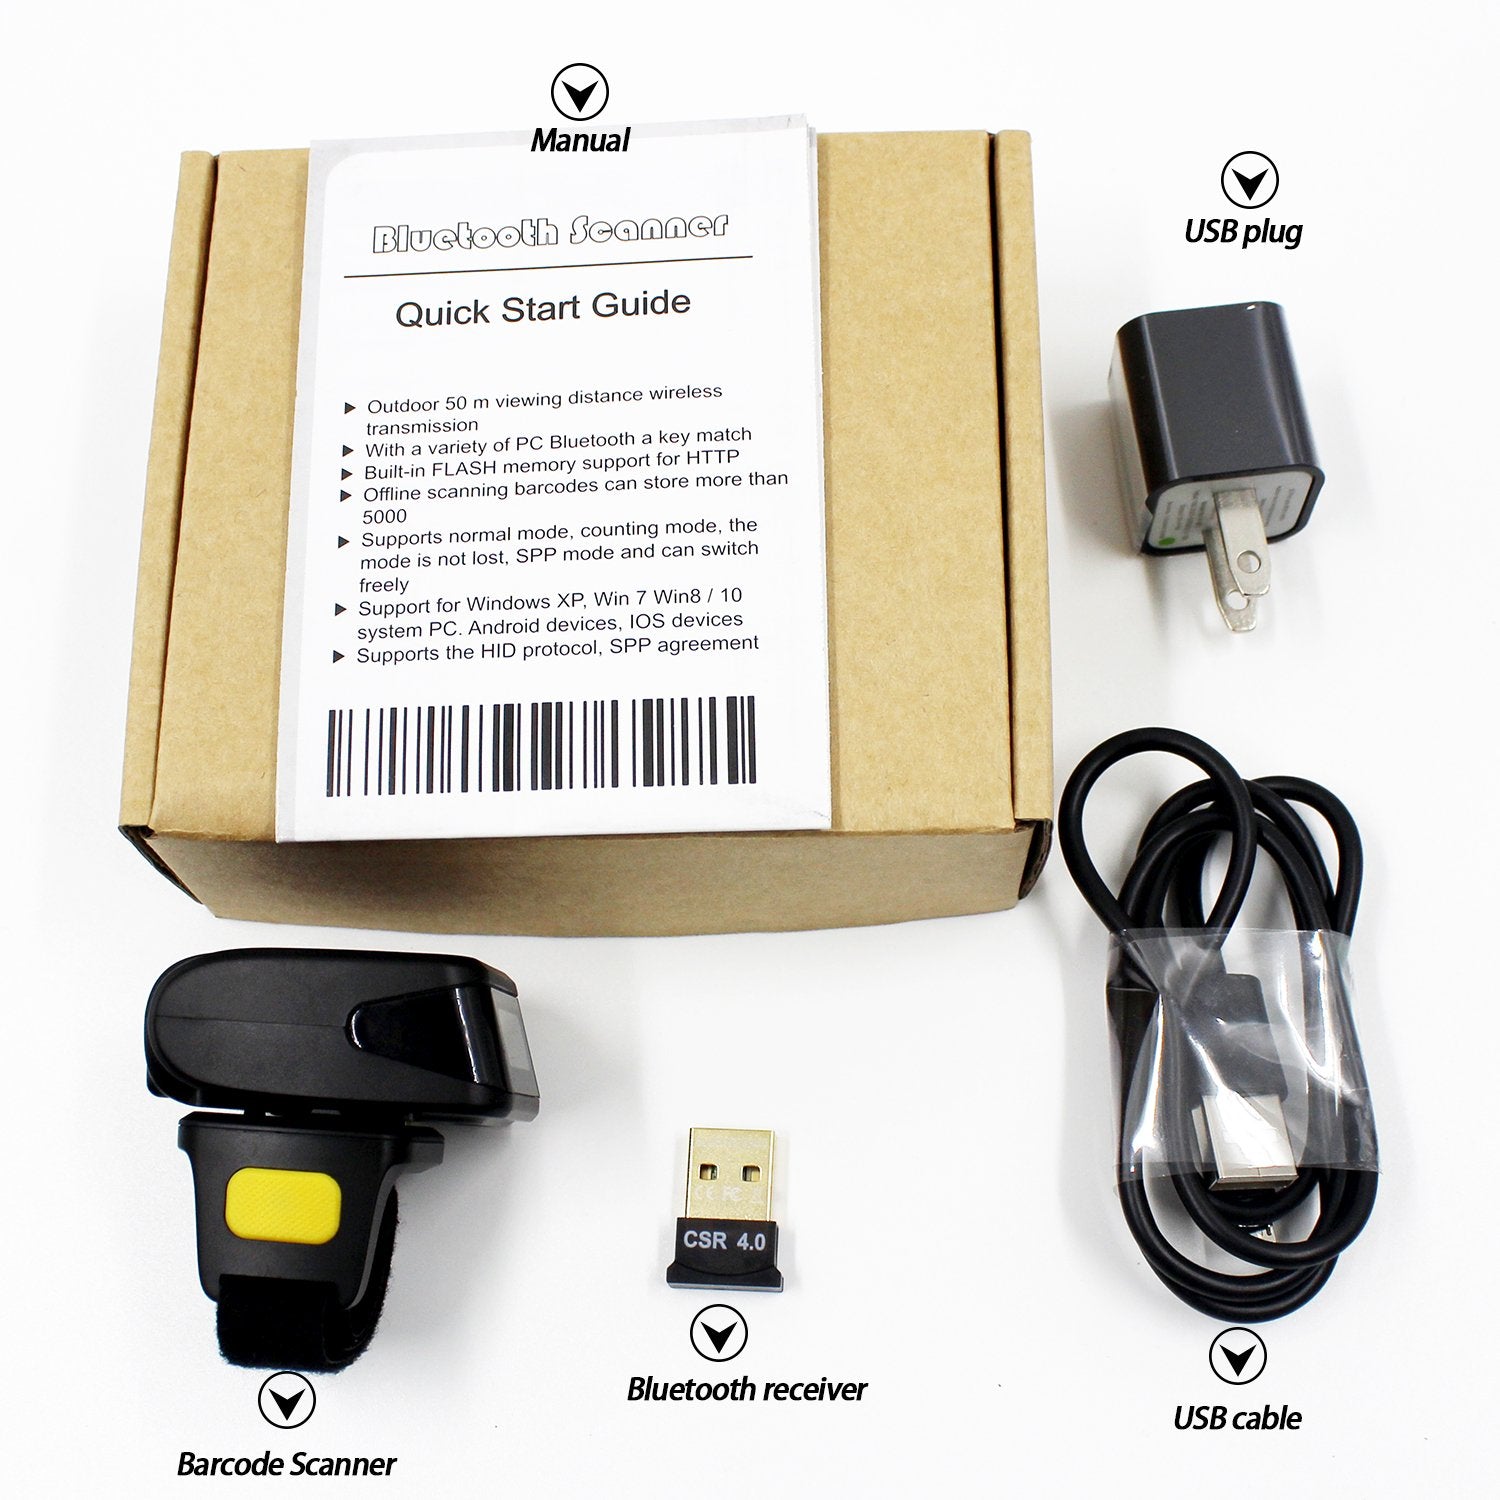 Portable 2D Wireless Ring Barcode Scanner Bluetooth, Mini USB Wired & 2.4G Wireless & Bluetooth Scanner, Image 1D QR Bar Code Reader PDF417 Data Matrix Screen Scan for iPad, Smartphone, PC